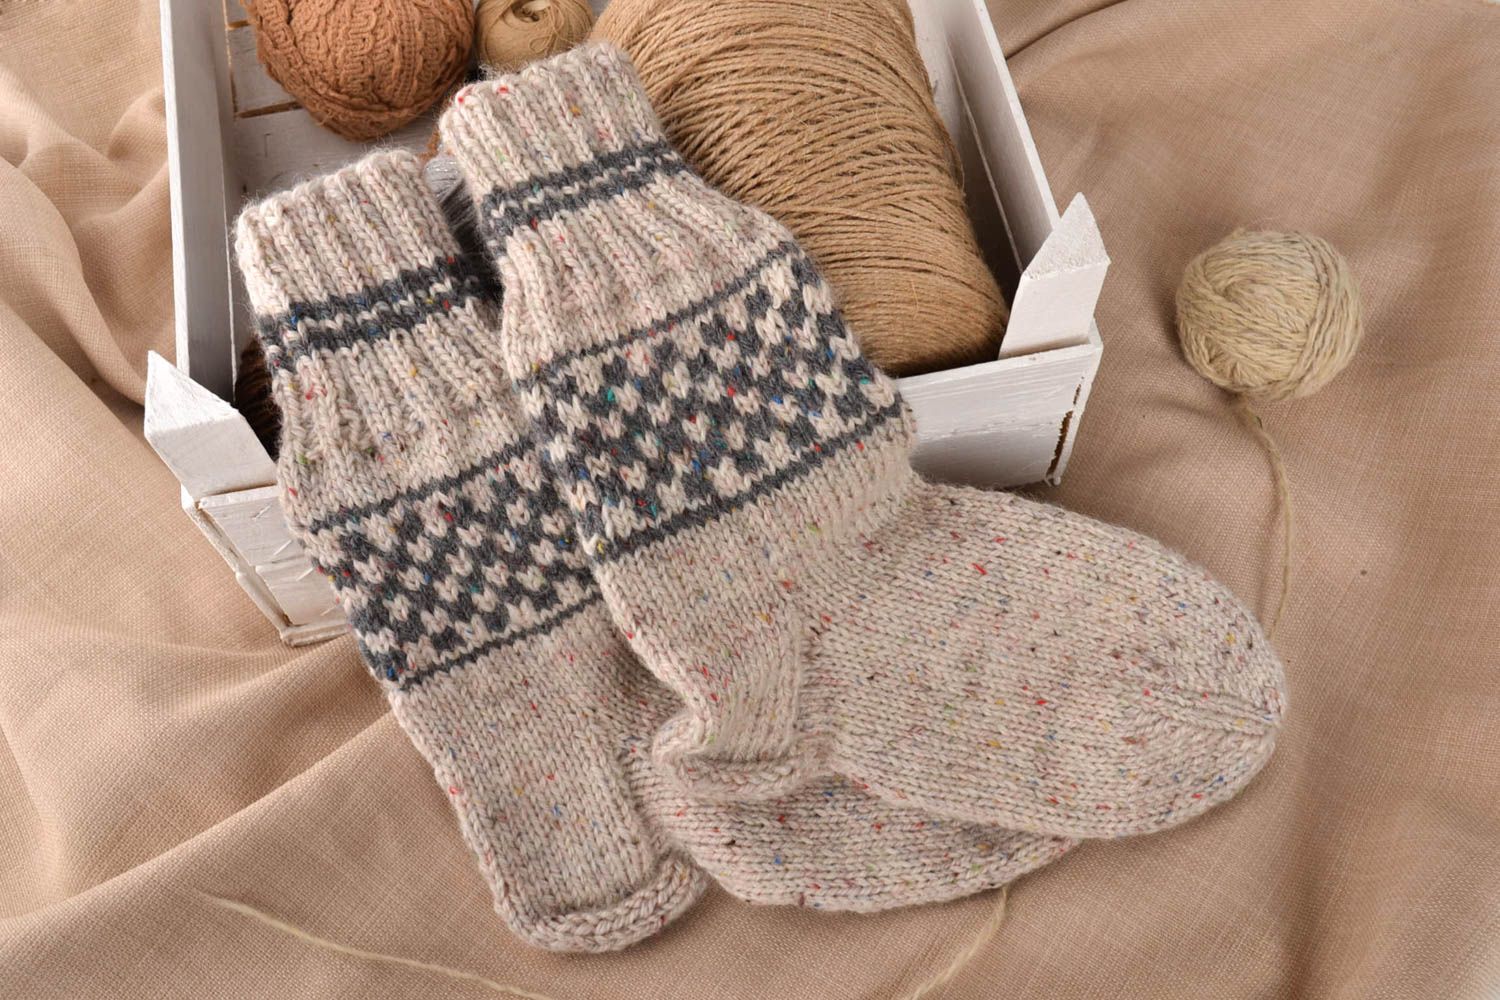 Comfortable handmade woolen socks knitted wool socks for men best gifts for him photo 1